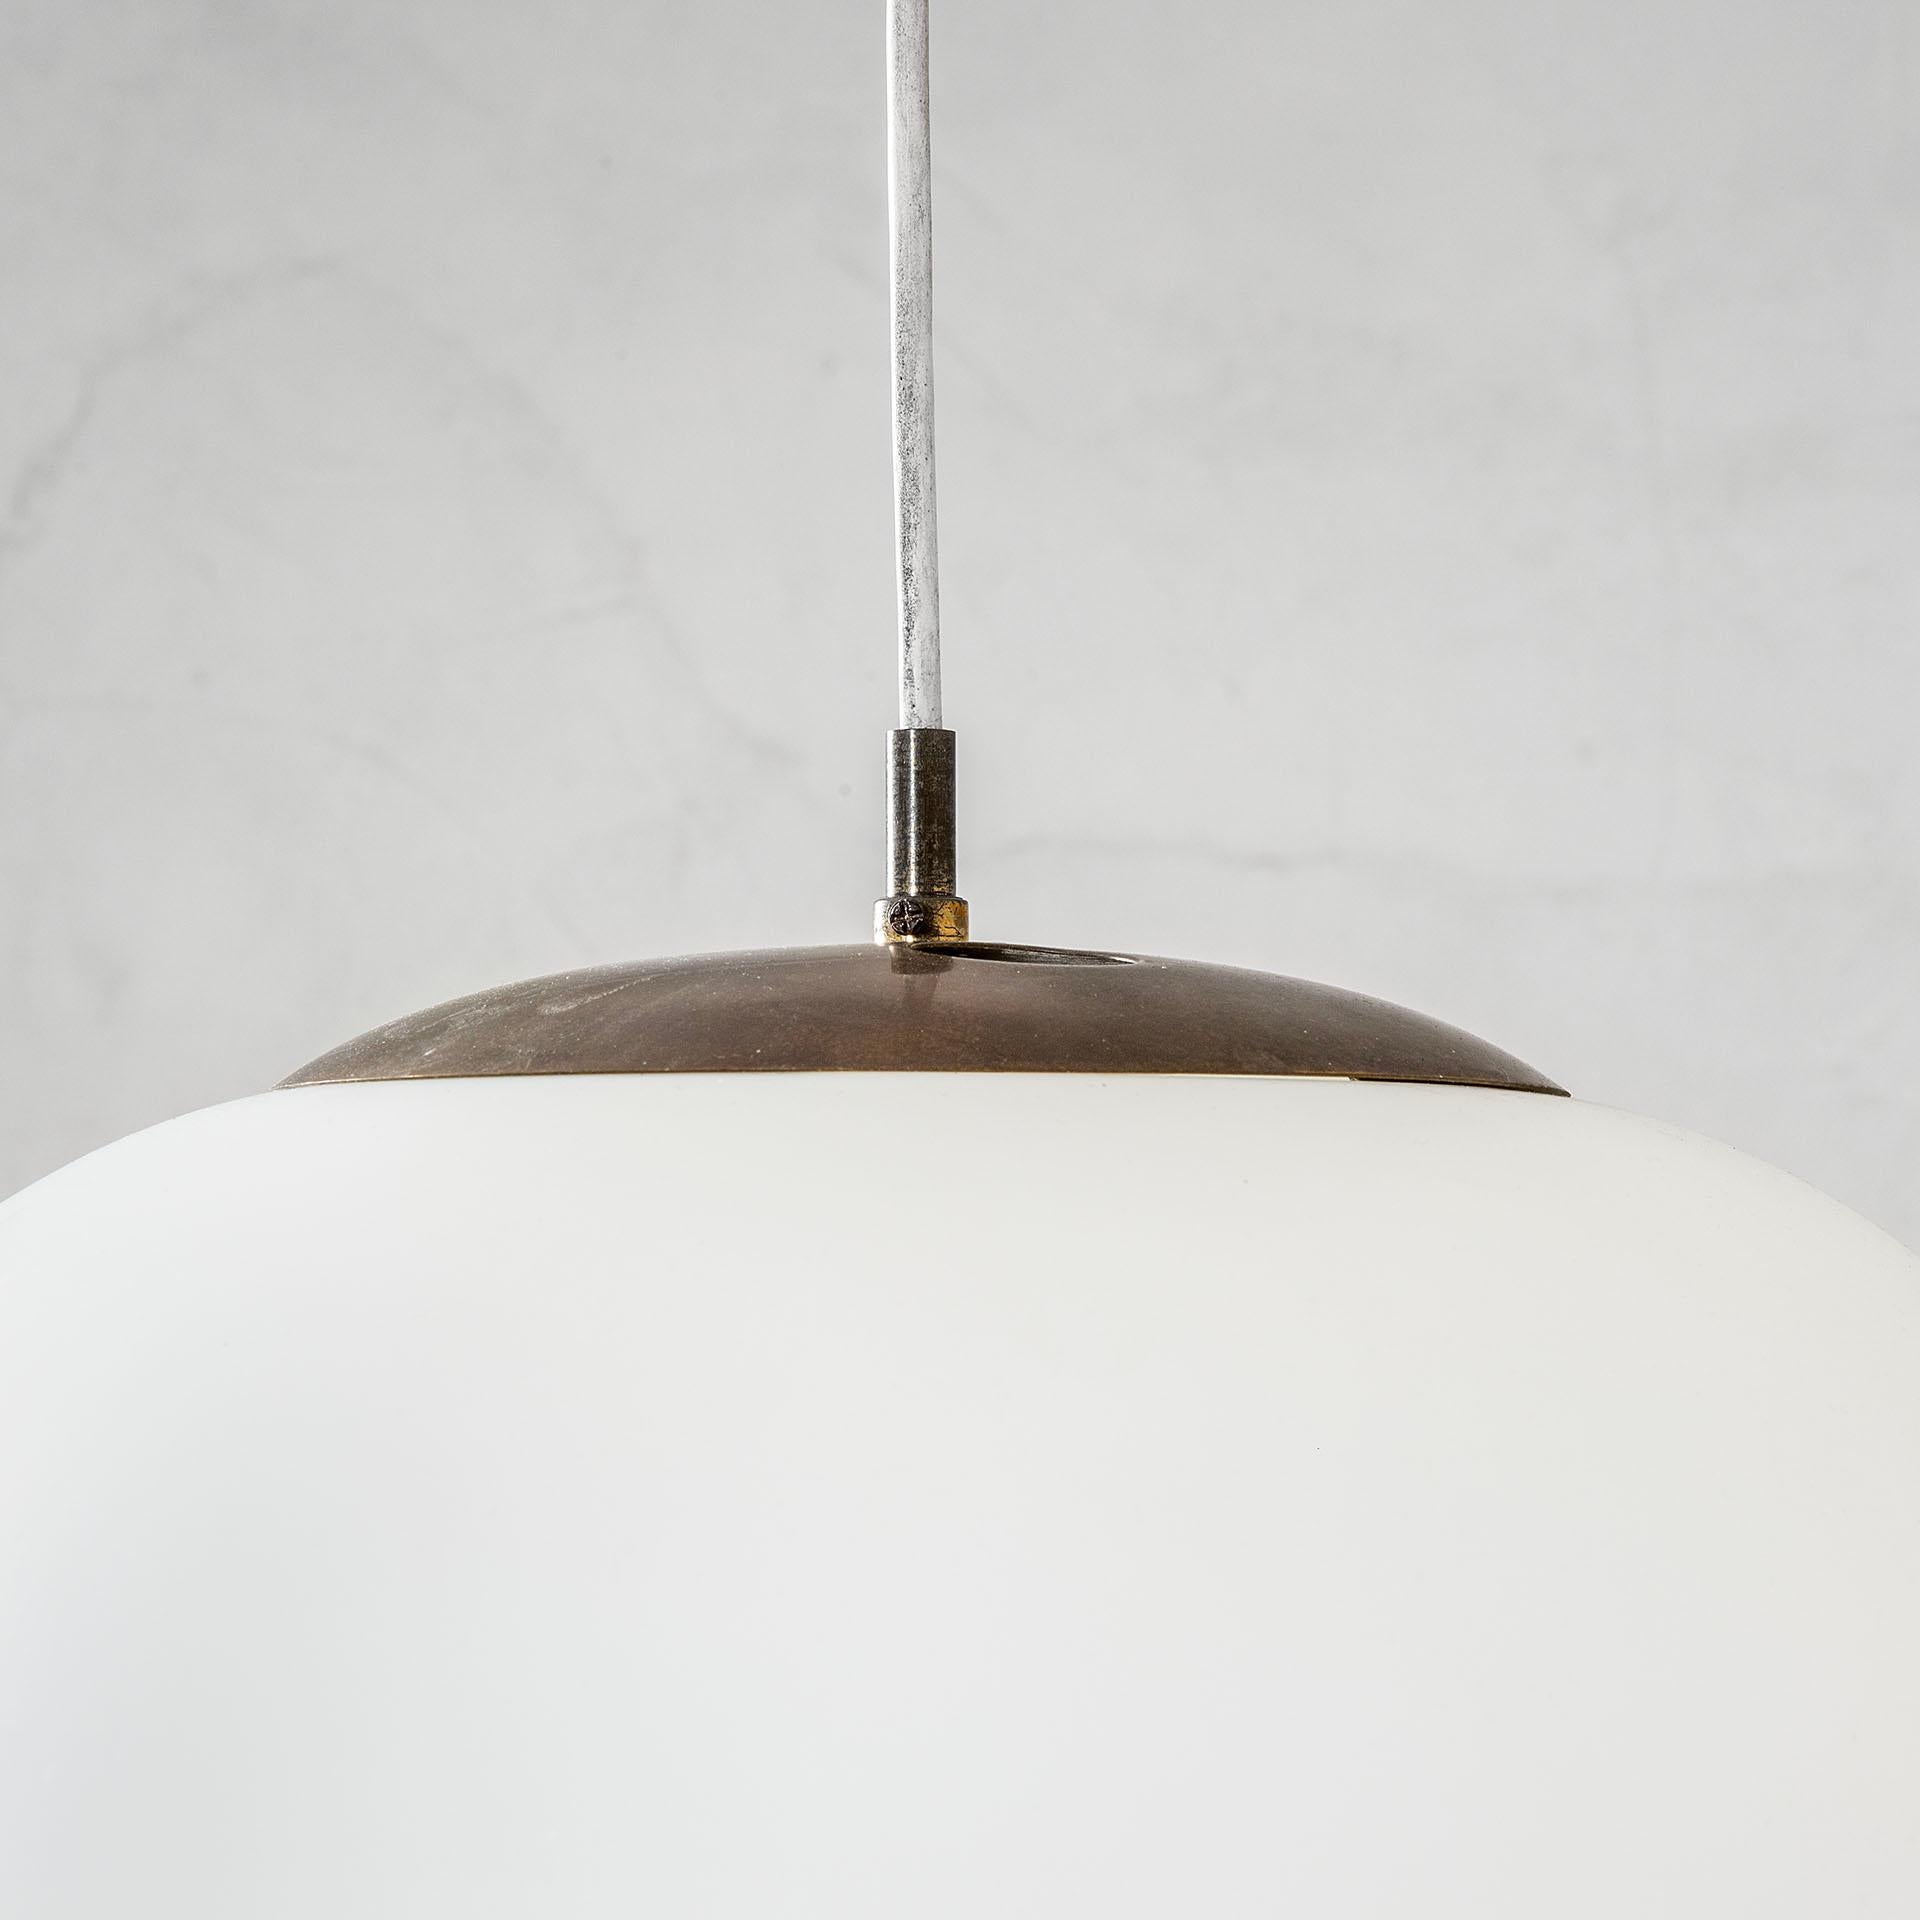 Italian 20th Century Stilnovo Pendant Lamp in White Opaline Glass and Brass Details, 50s